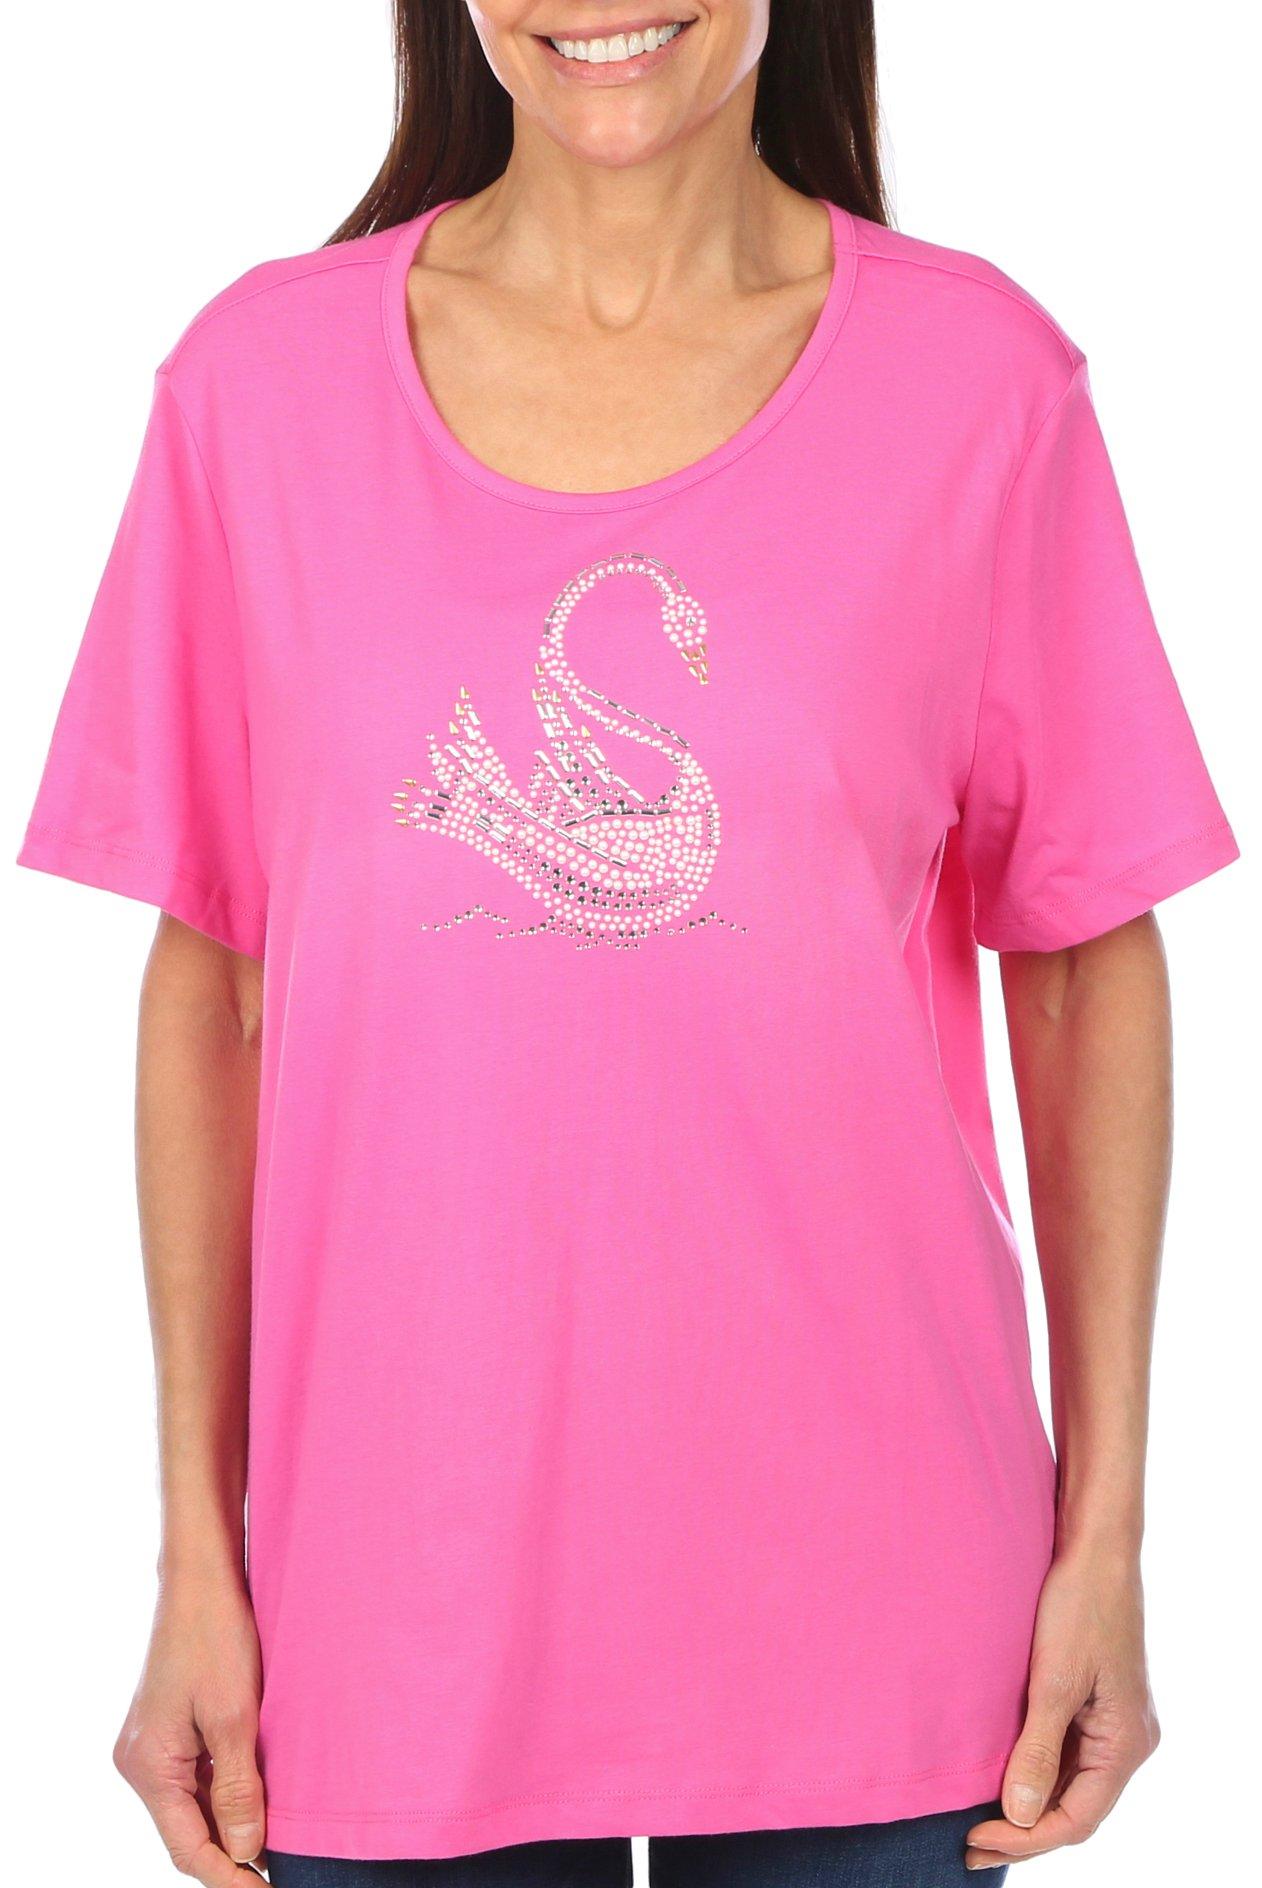 Coral Bay Womens Embellished Jewel Swan Short Sleeve Top